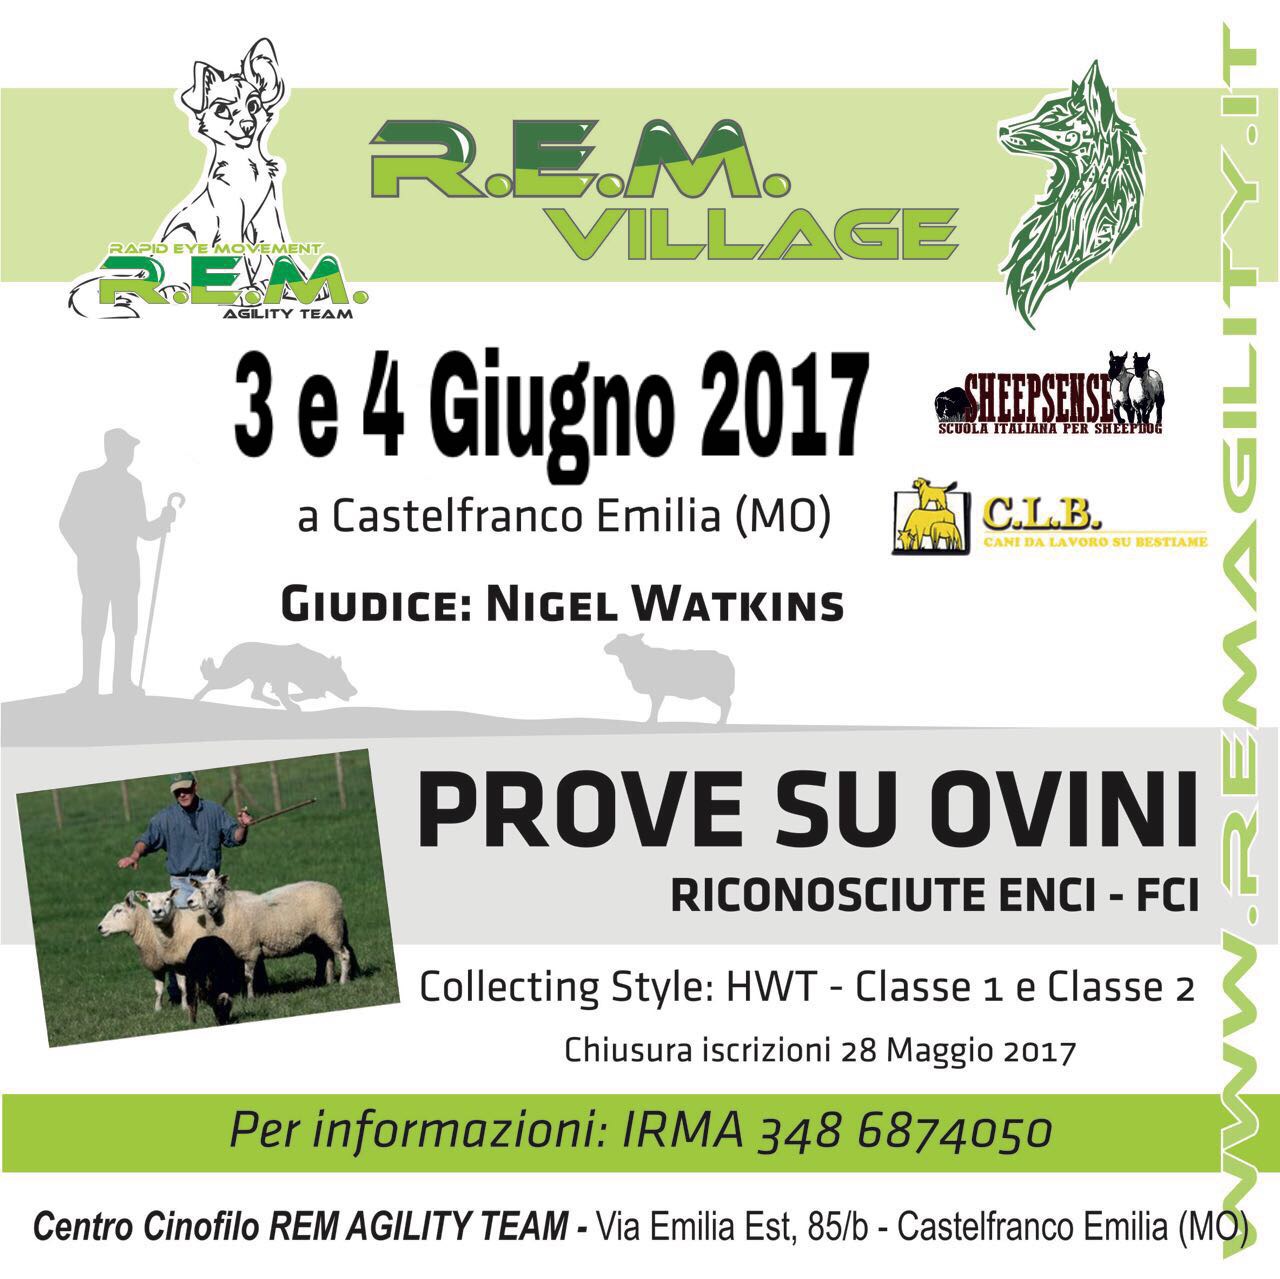 3-4 Giugno 2017 – Castelfranco Emilia (BO)